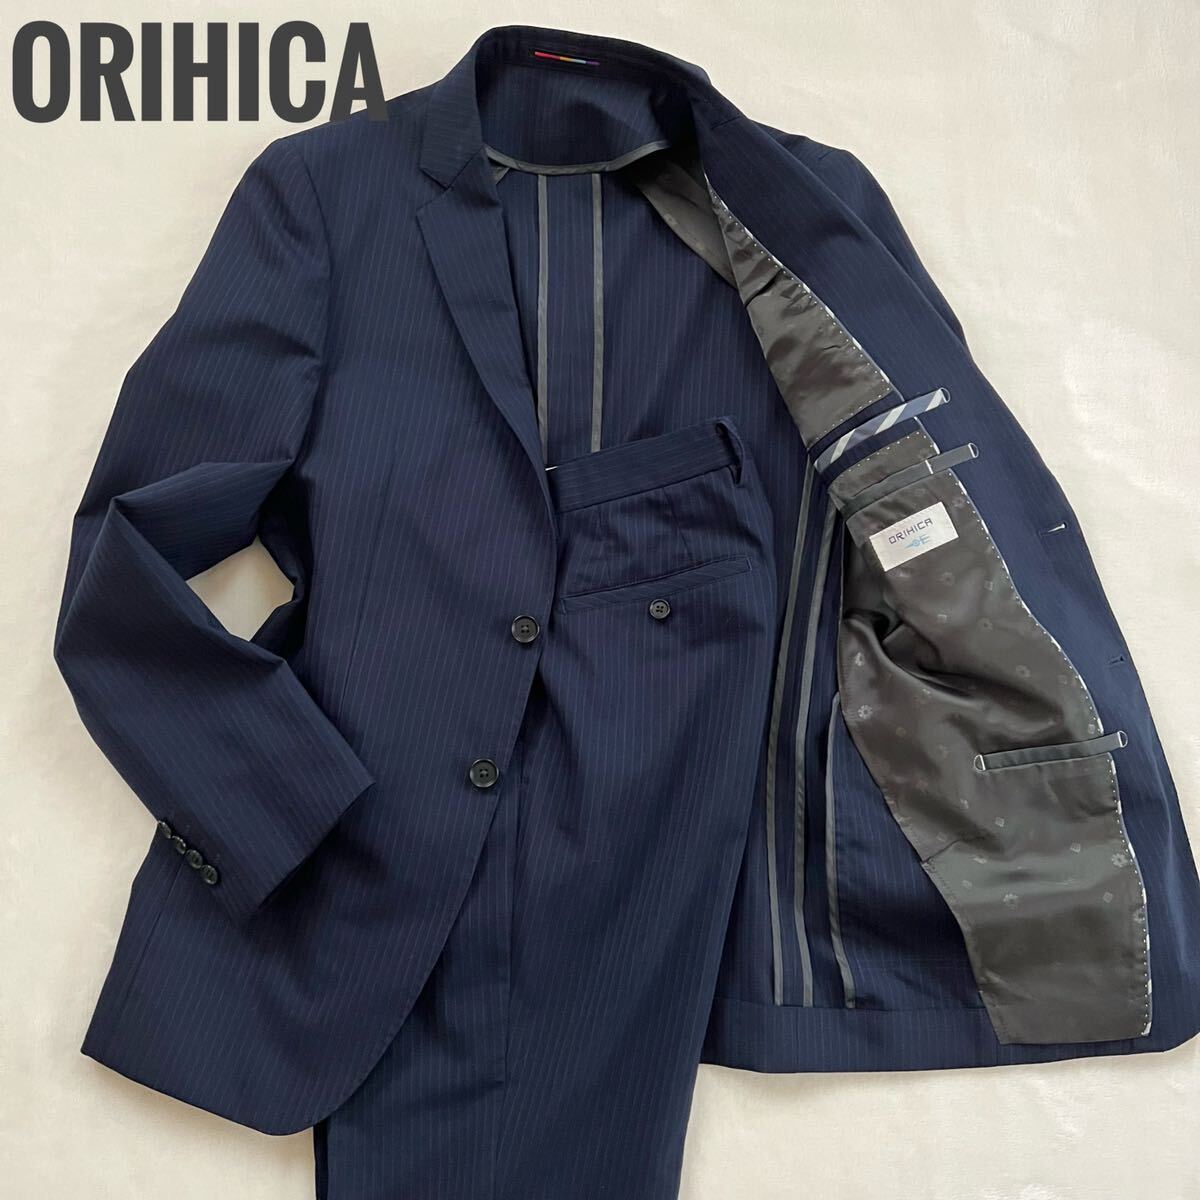 ORIHICA オリヒカ ストラップ柄スーツセットアップ ネイビー Y6 春、夏の画像1